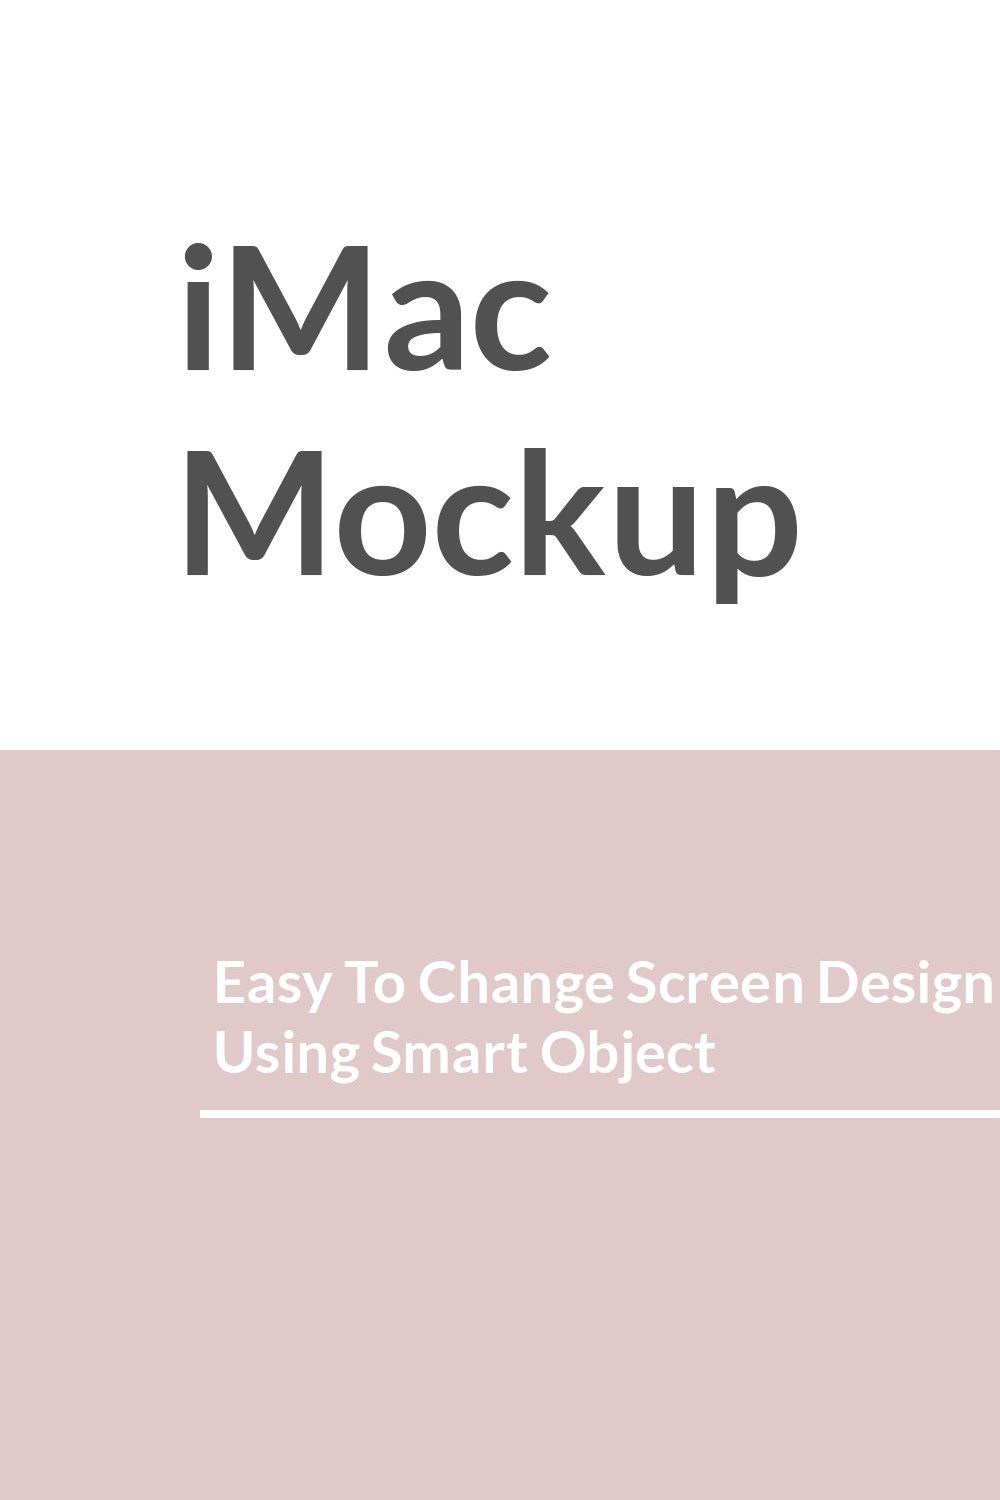 Minimal iMac mockup pinterest preview image.